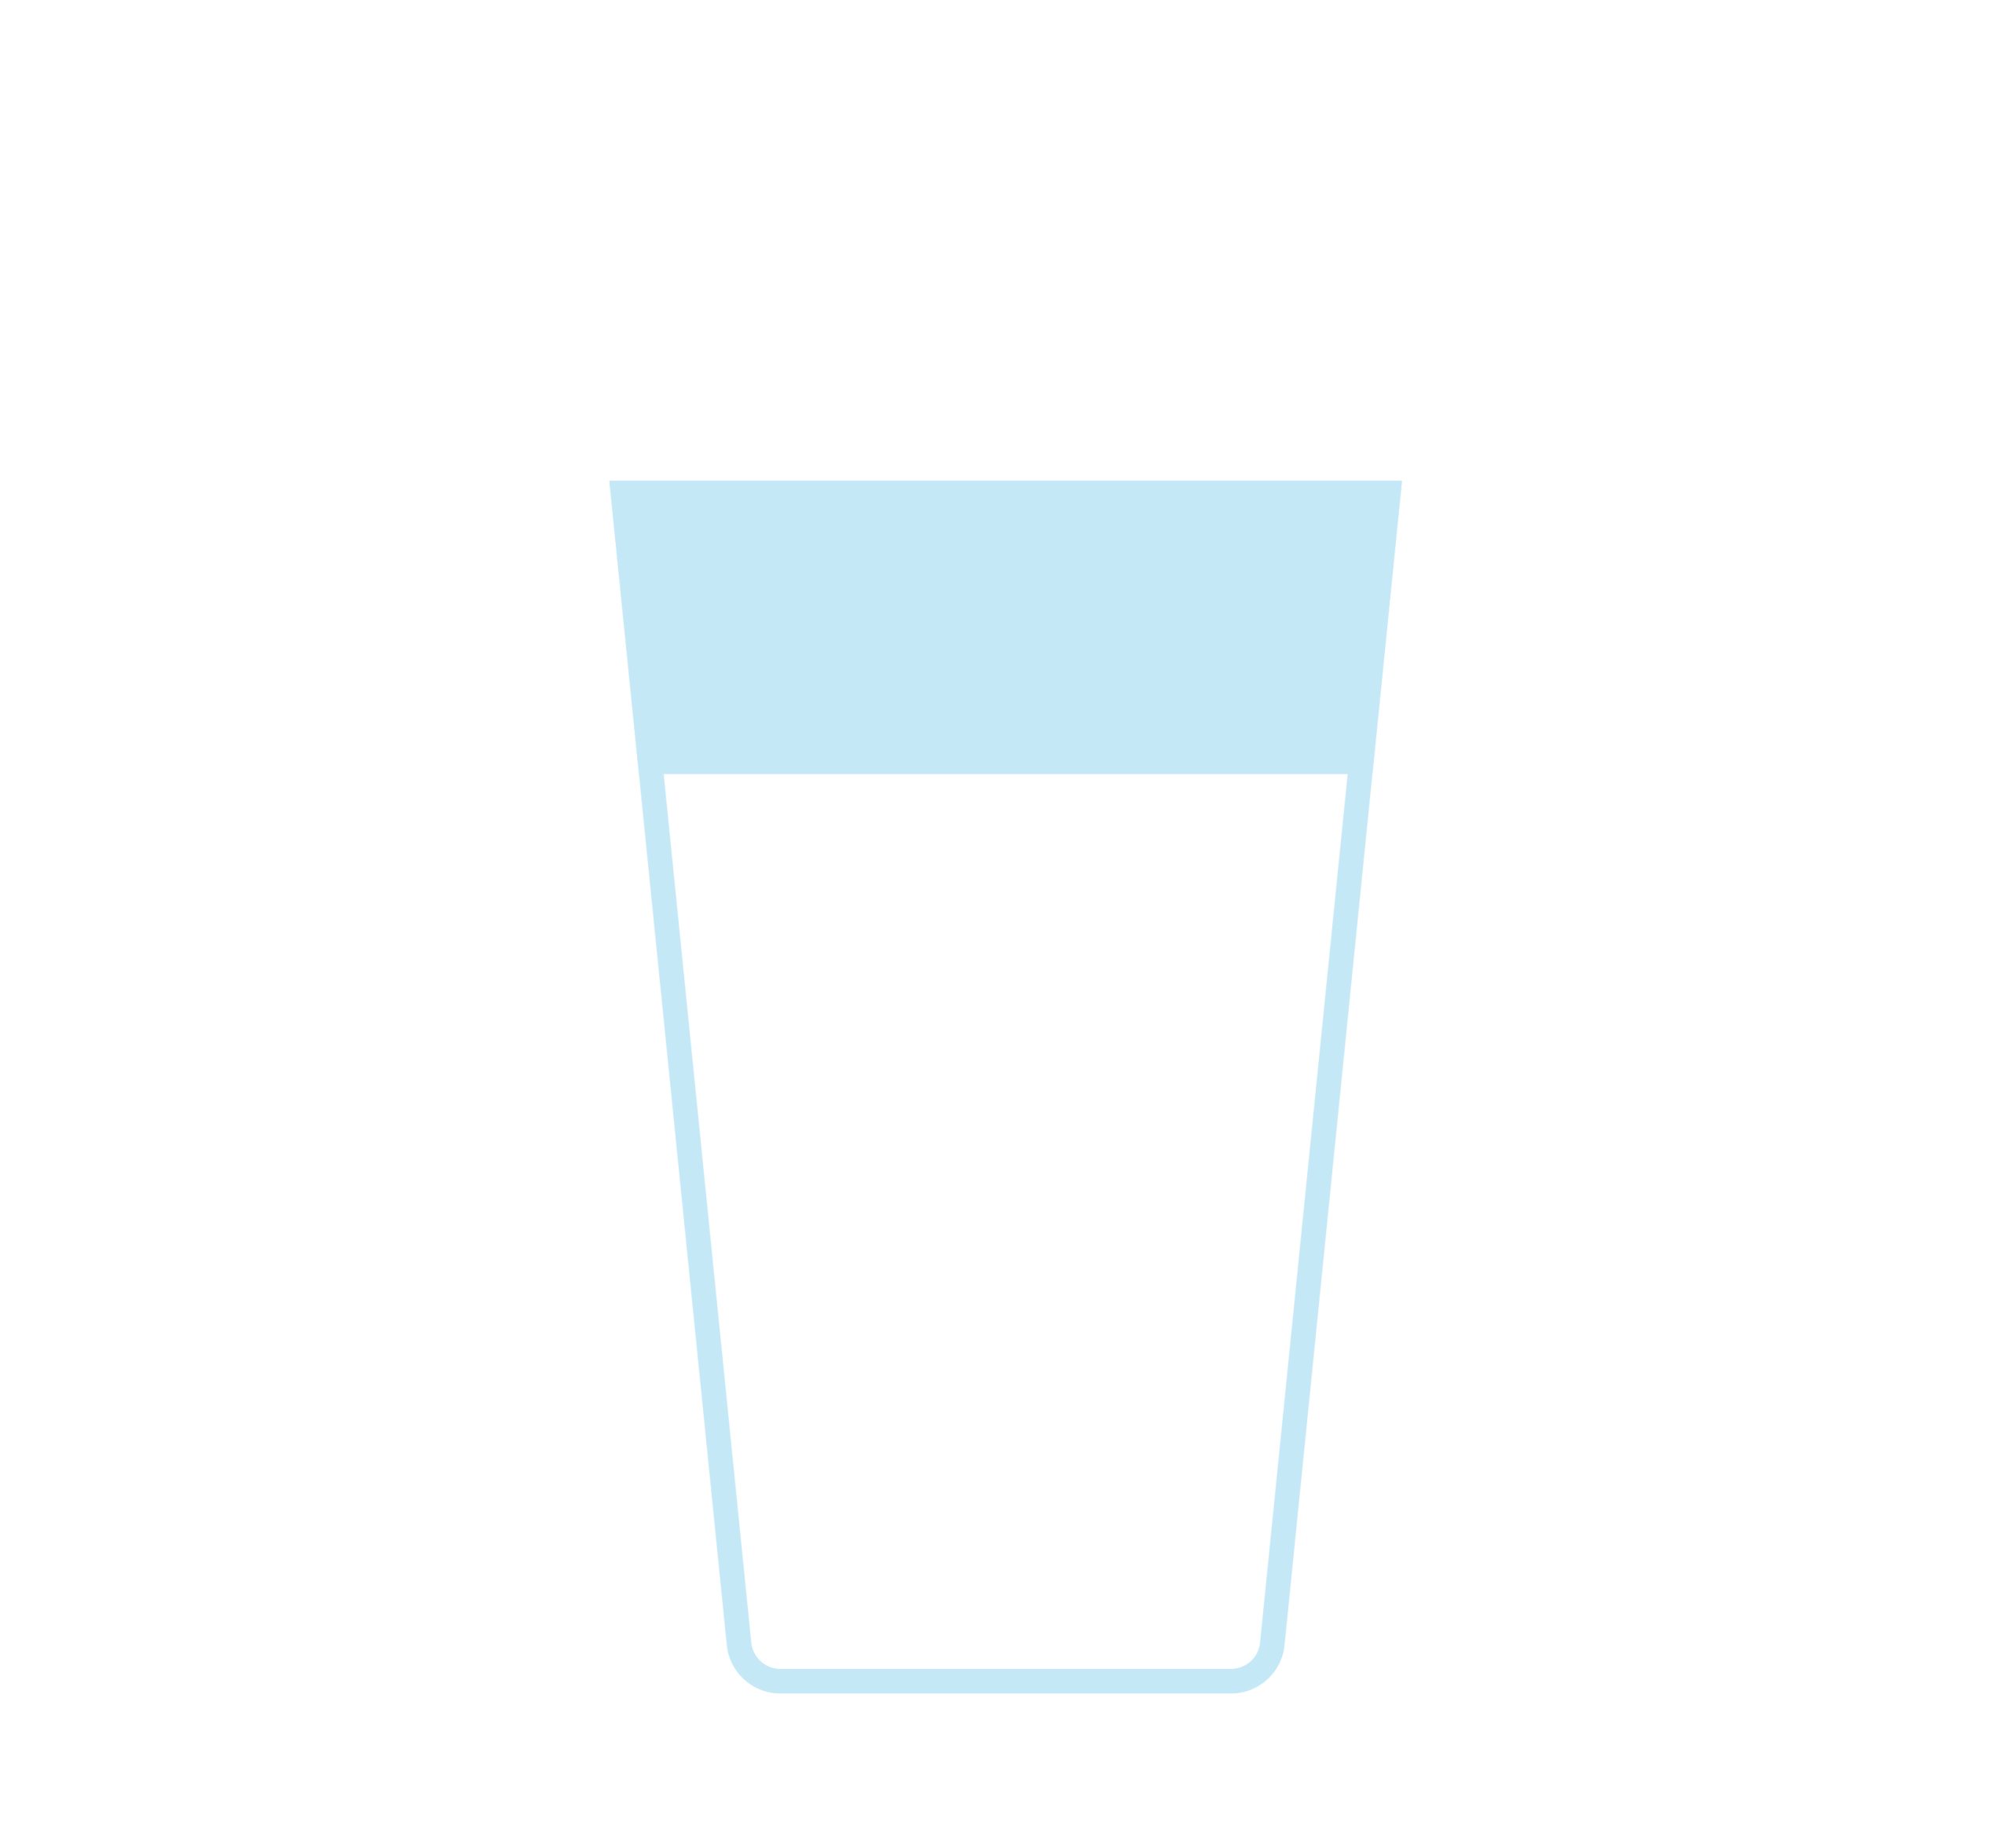 Illustration of glass of milk